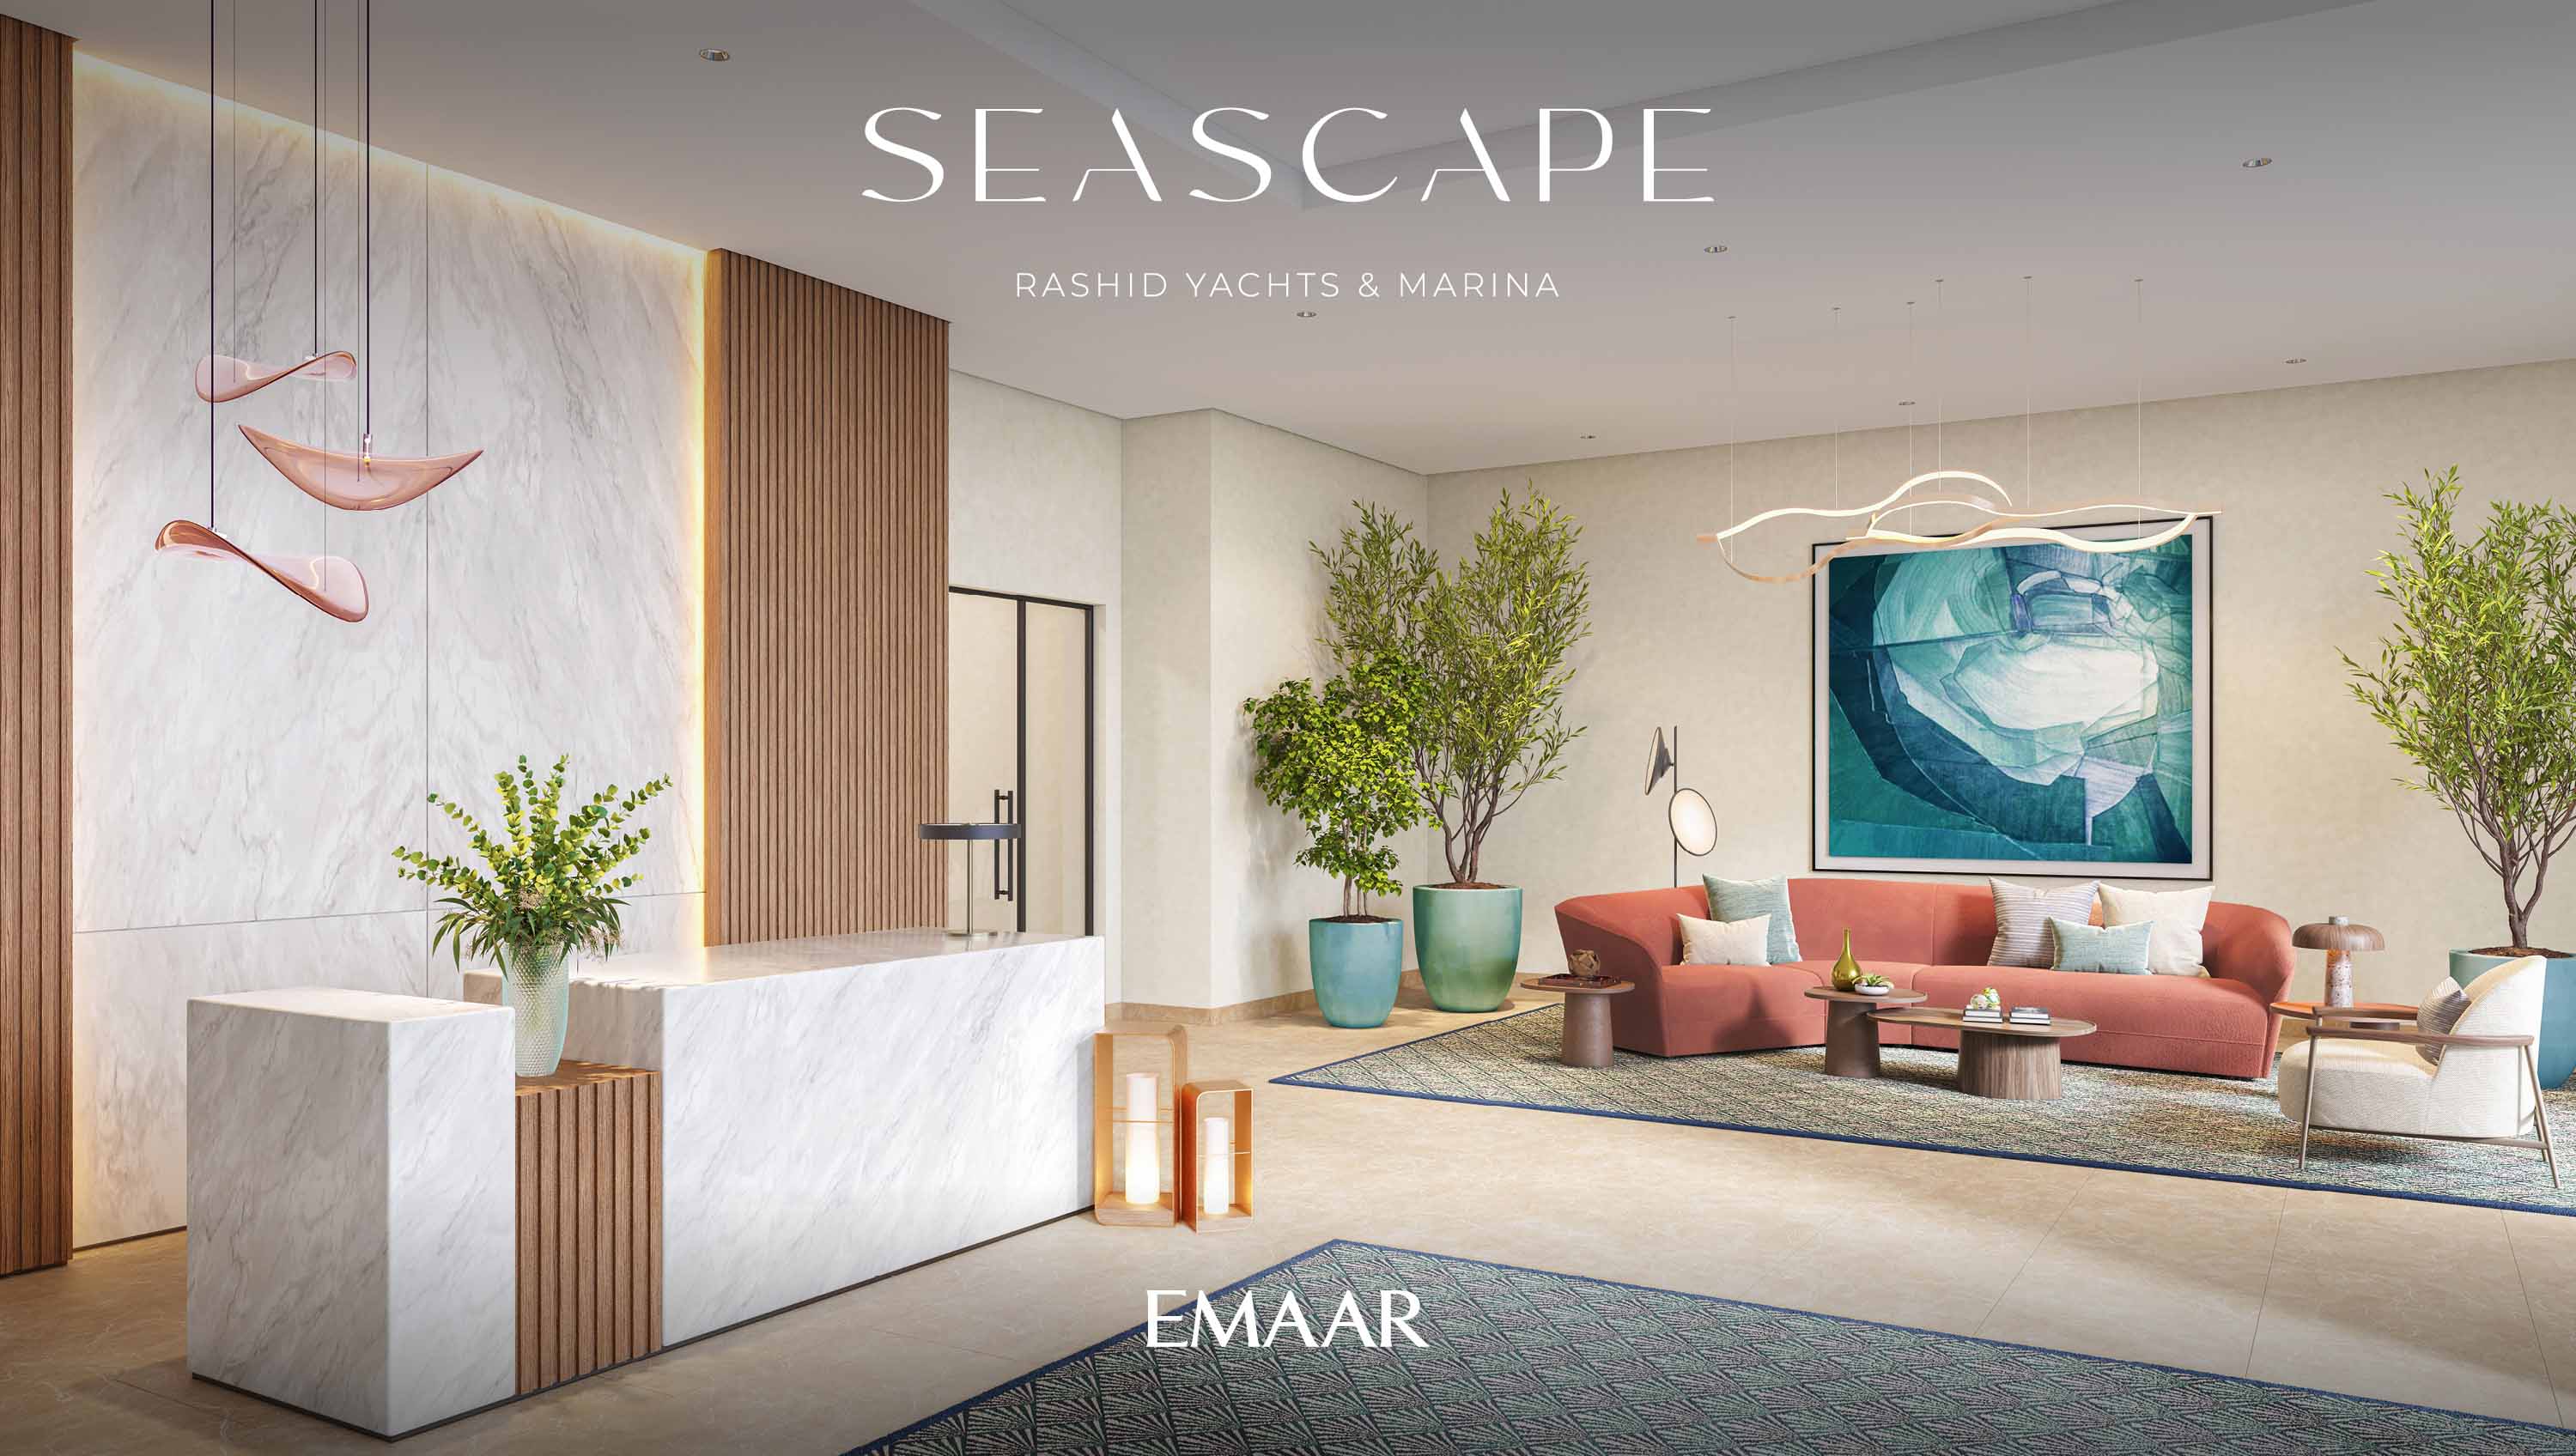 Seascape - Rashid Yachts & Marina